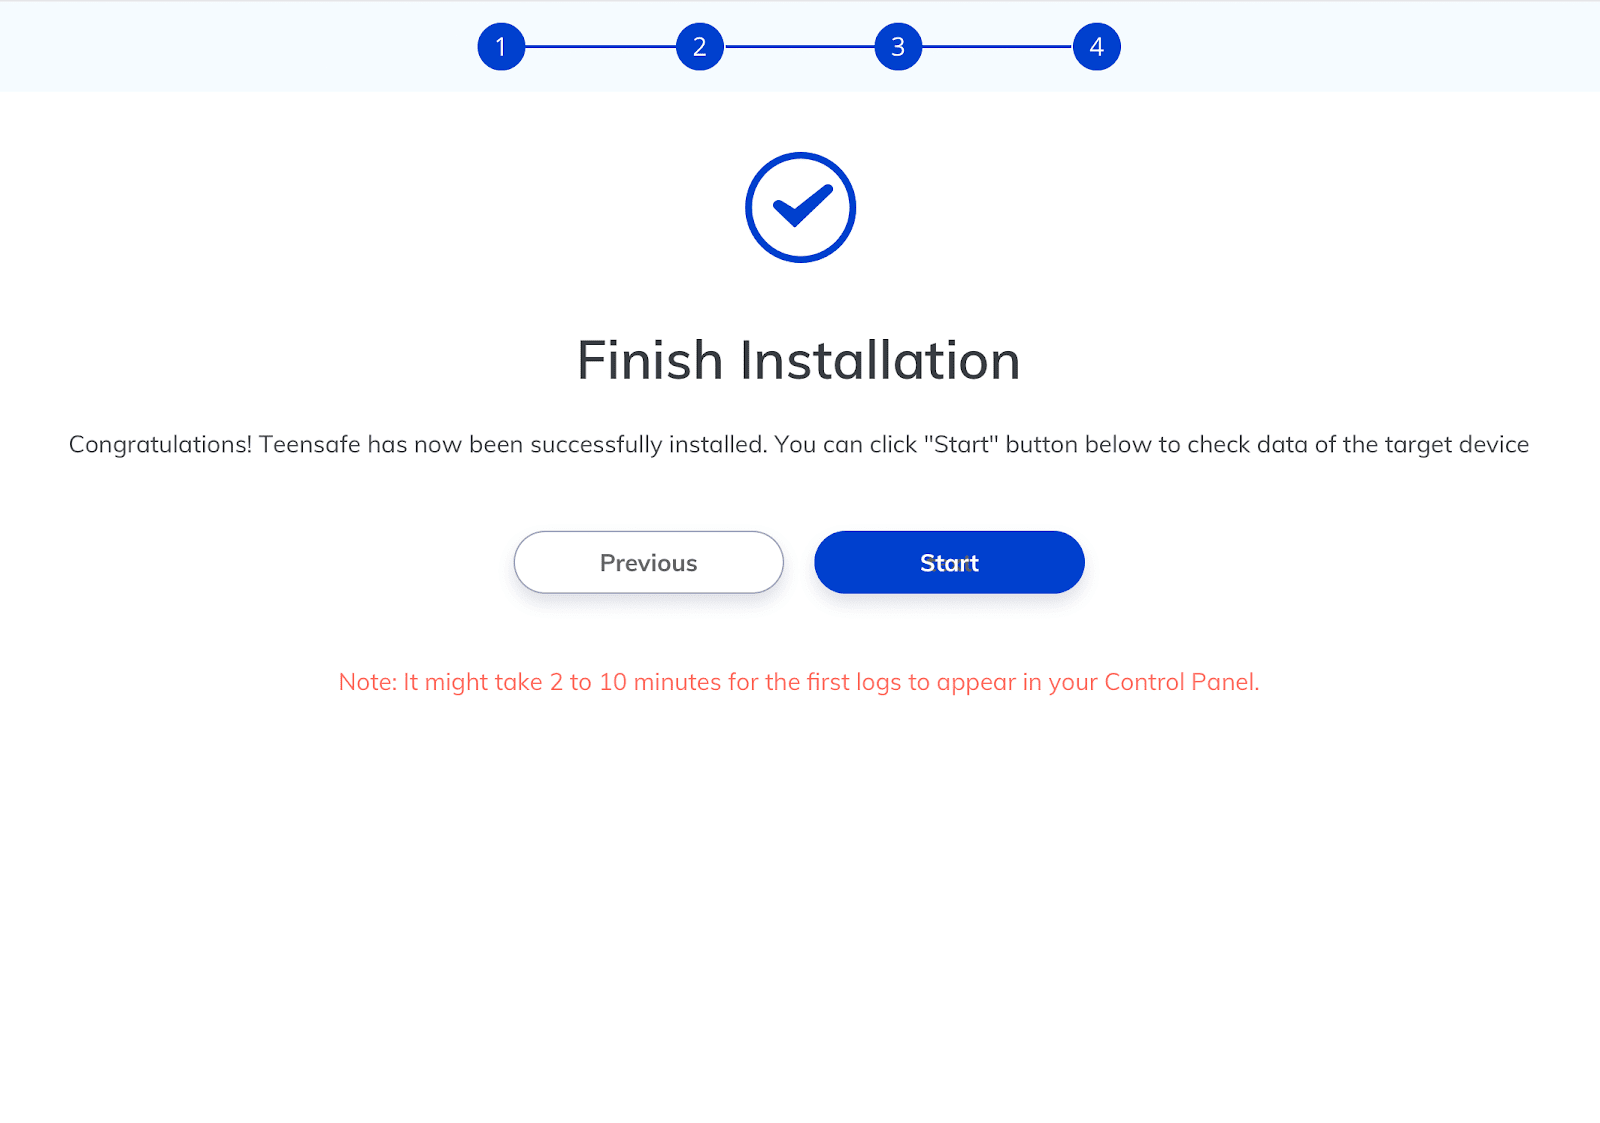 https://i.teensafe.net/support/wp-content/uploads/2020/08/teensafe-finish-installation.png